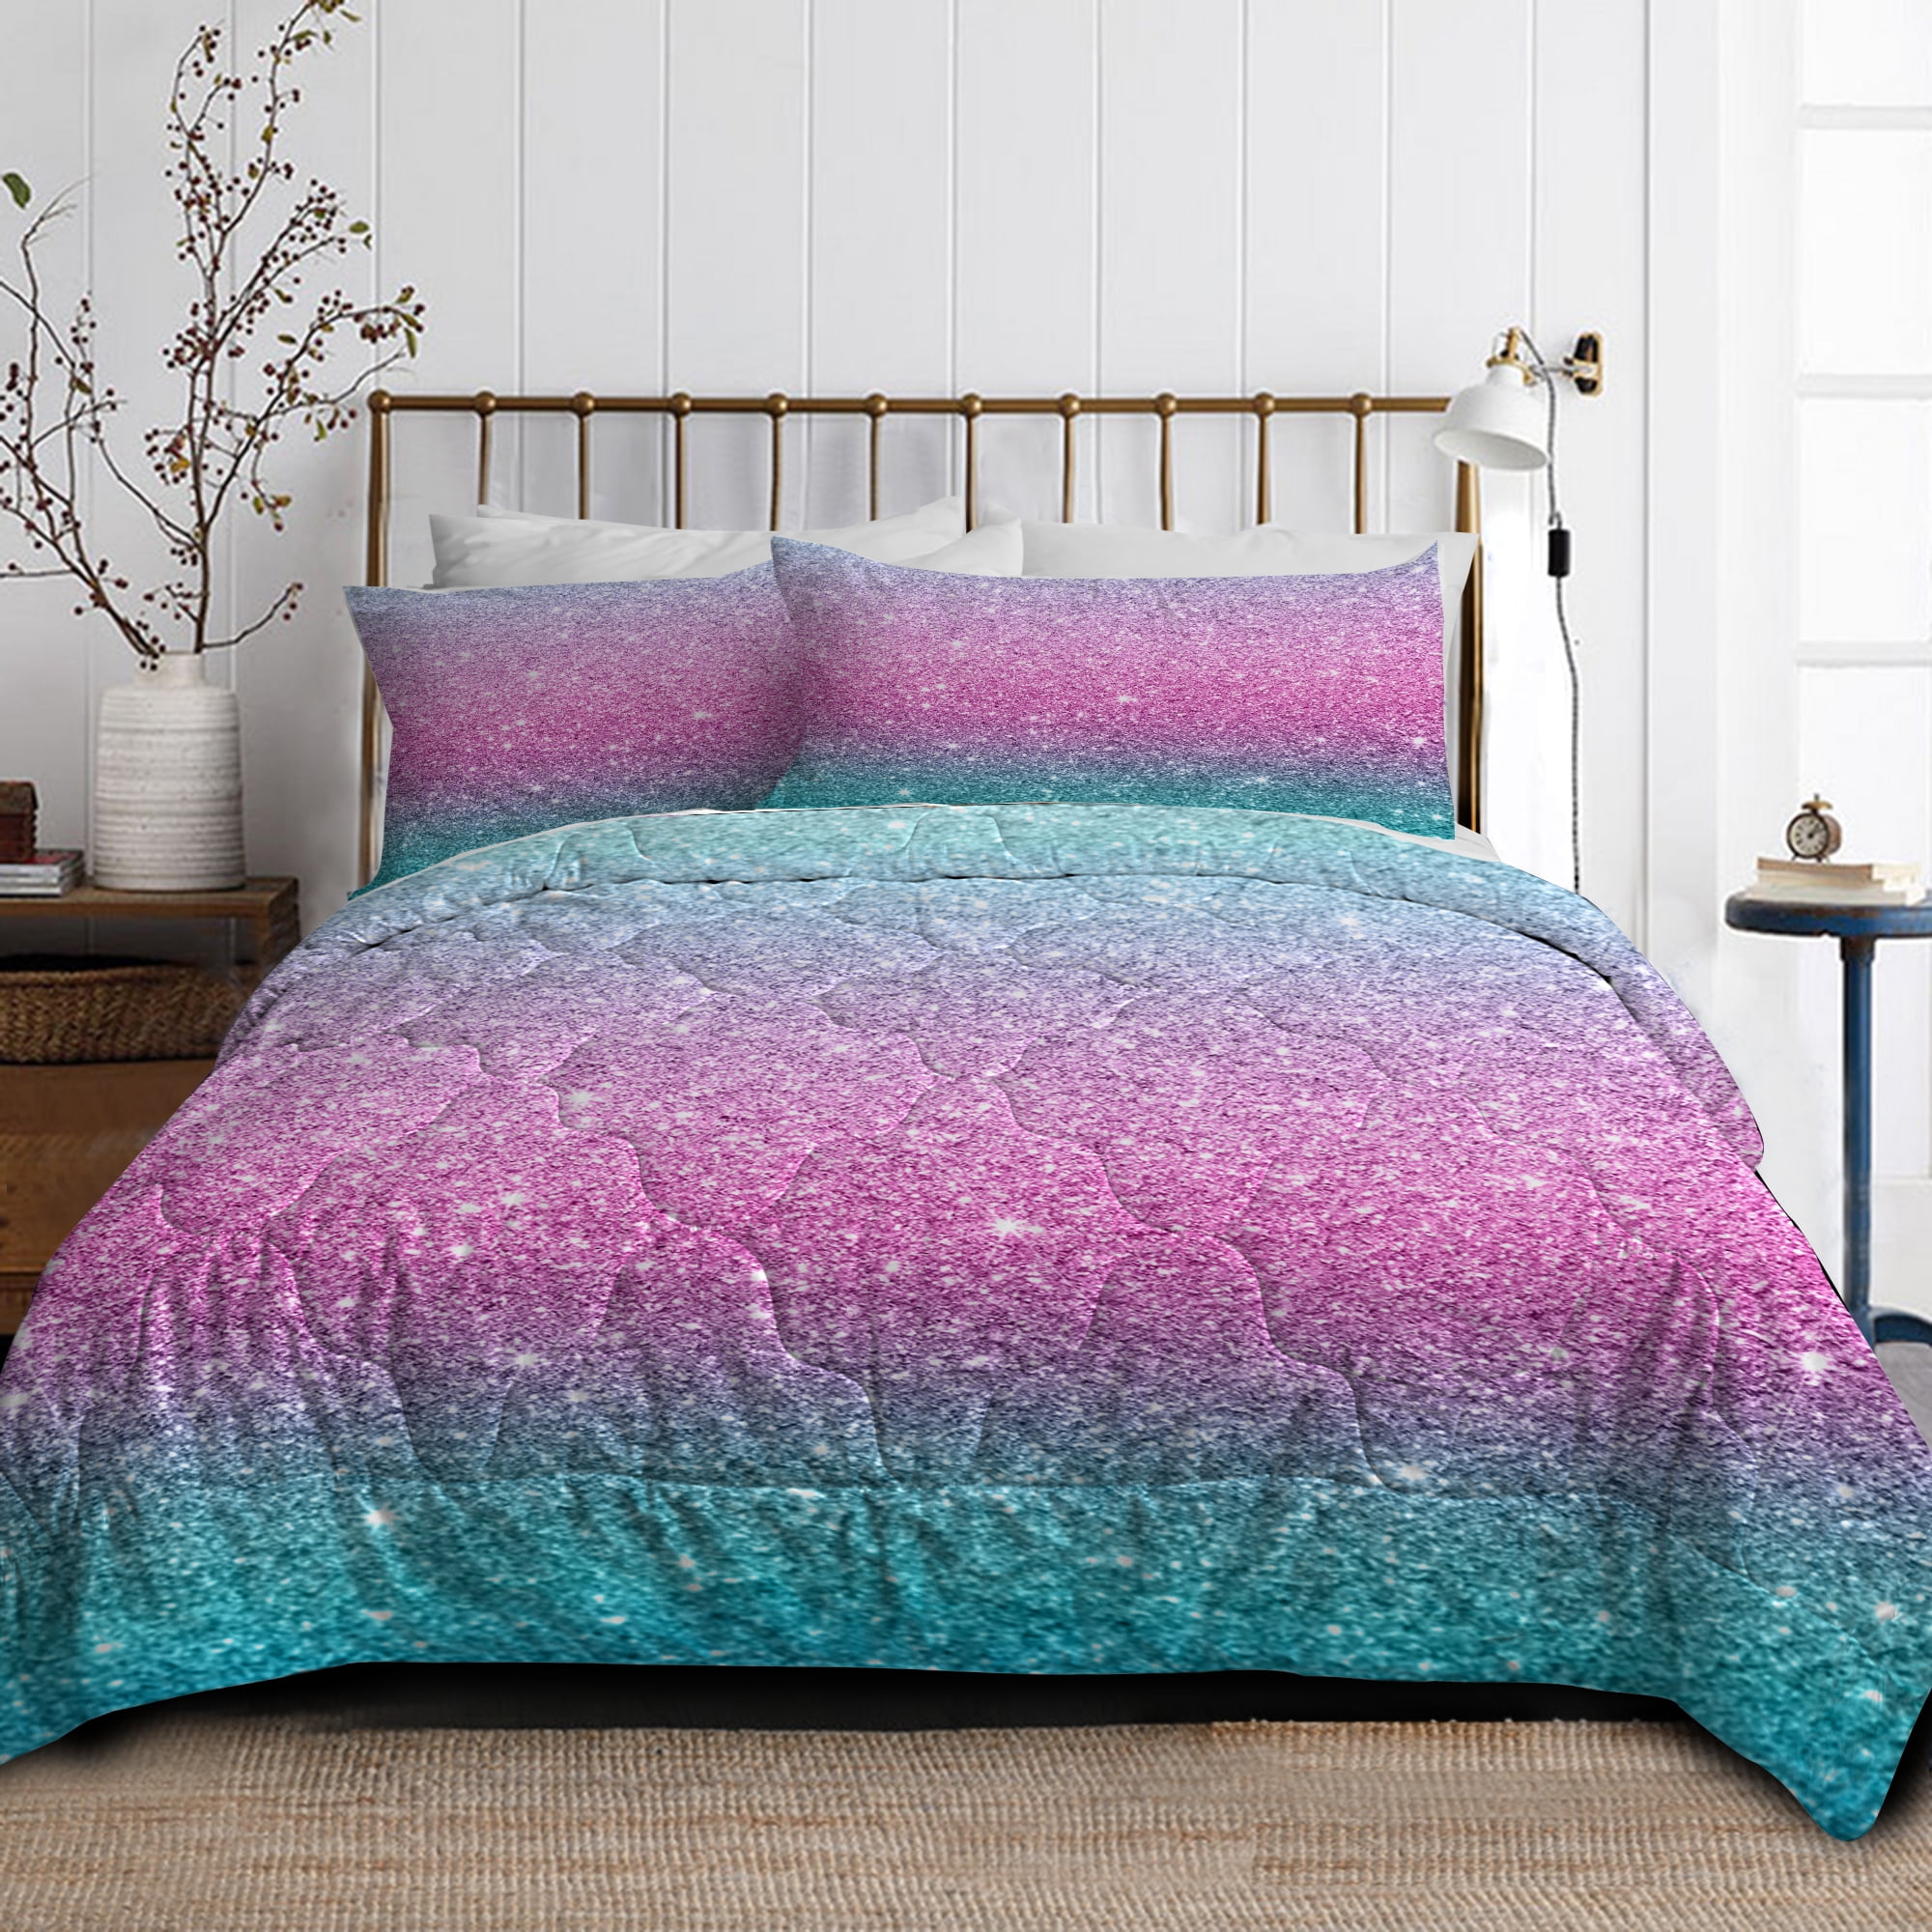 Themed Comforter Set With Pillow Shams, Teen Girls Twin Bedding Sets